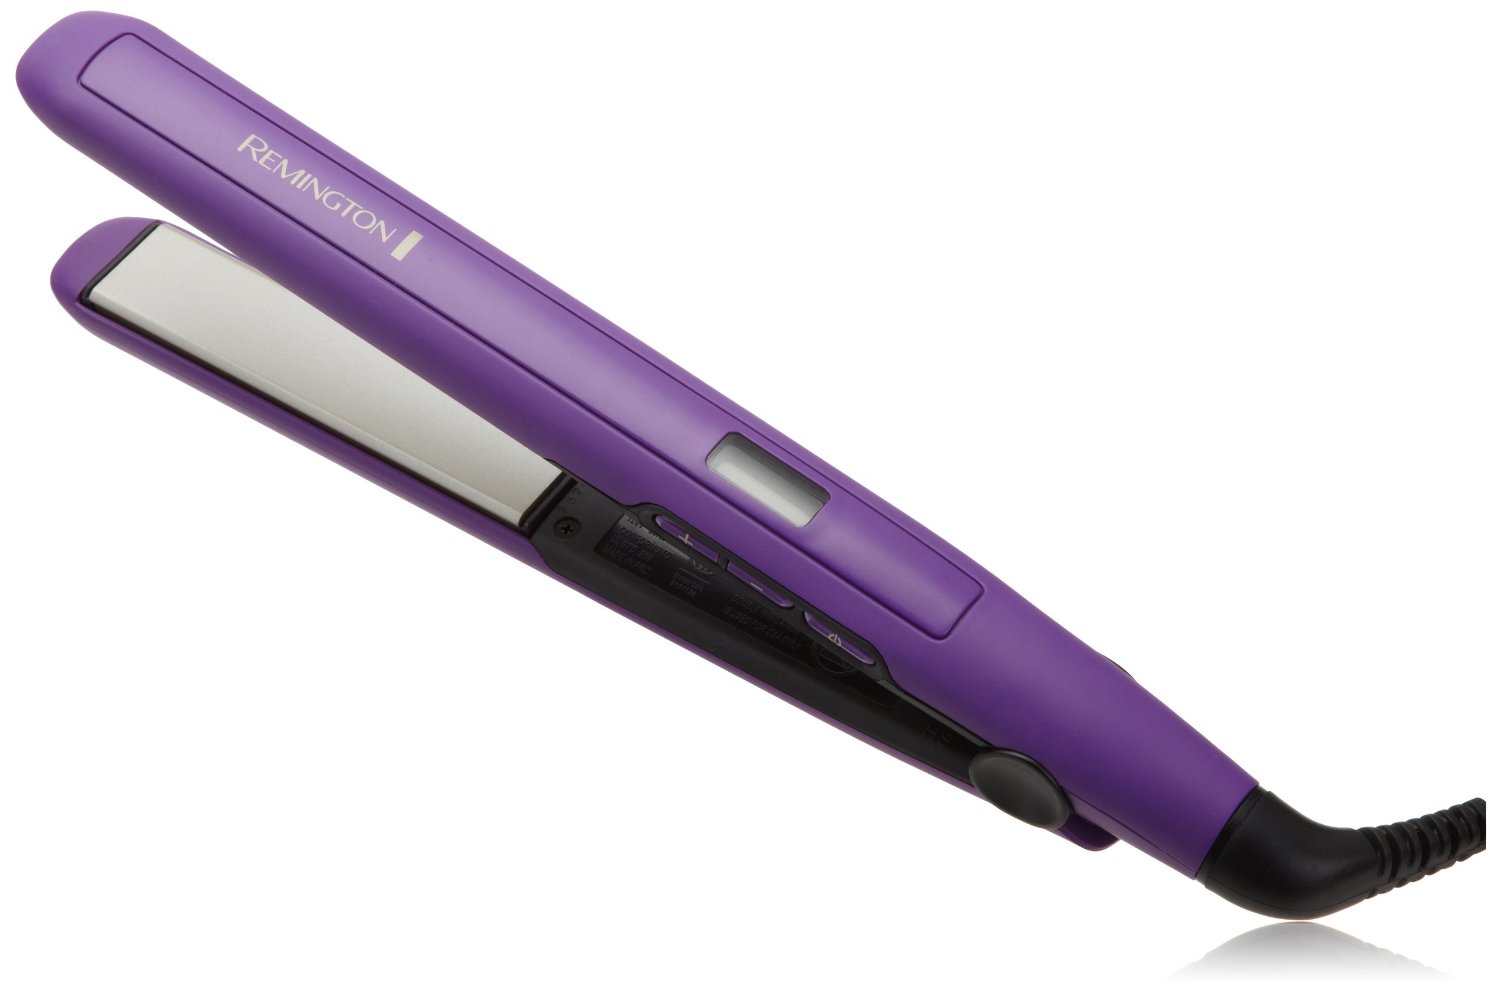 A purple Remington Pro hair straightener